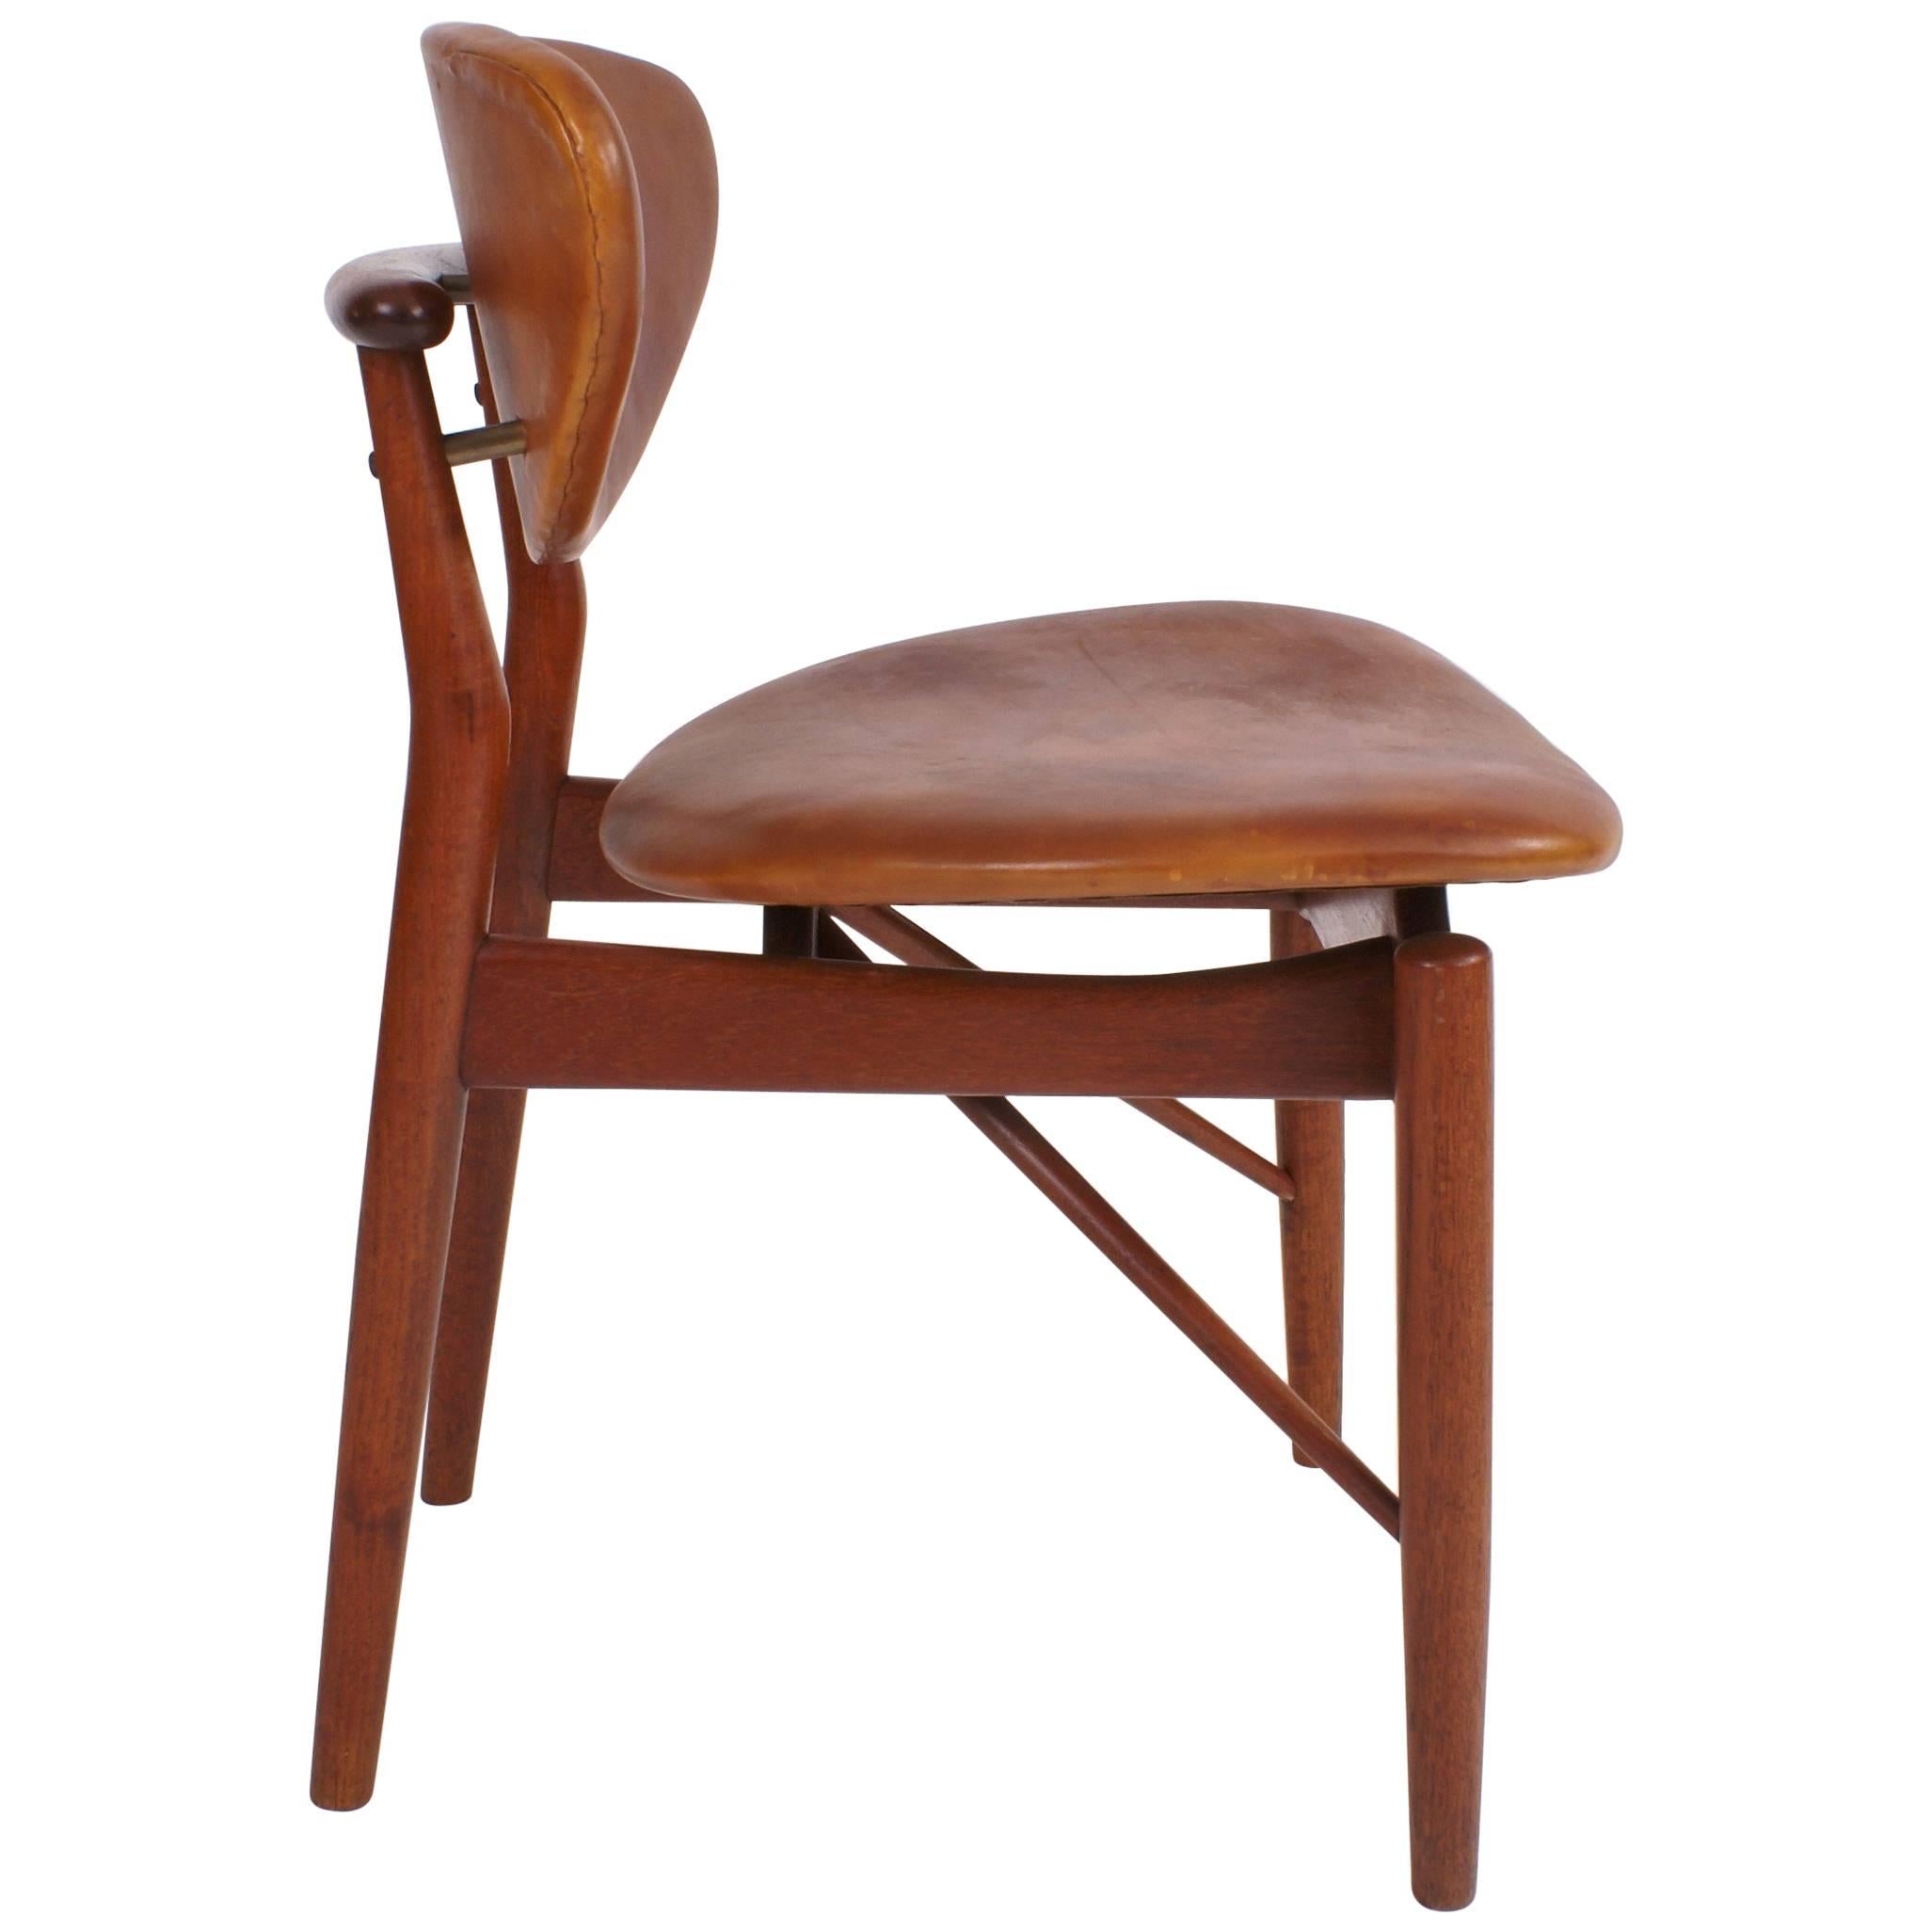 Finn Juhl NV55 Chair for Niels Vodder in Teak and Natural Leather, 1955